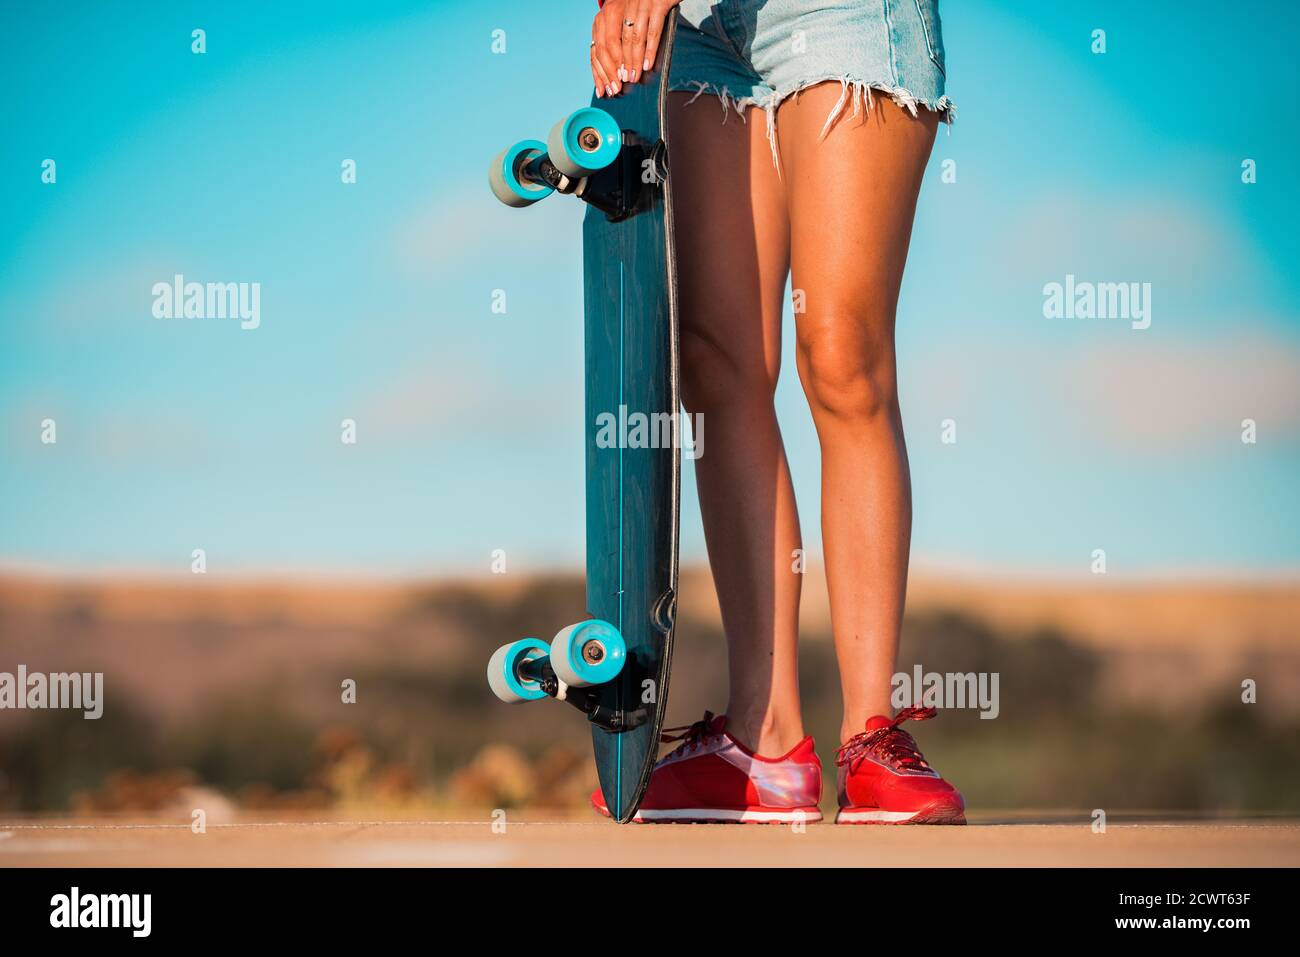 Fit female mit Skinny gebräunten Beinen in stilvollen Jeans Shorts Hält Skateboard Stockfoto